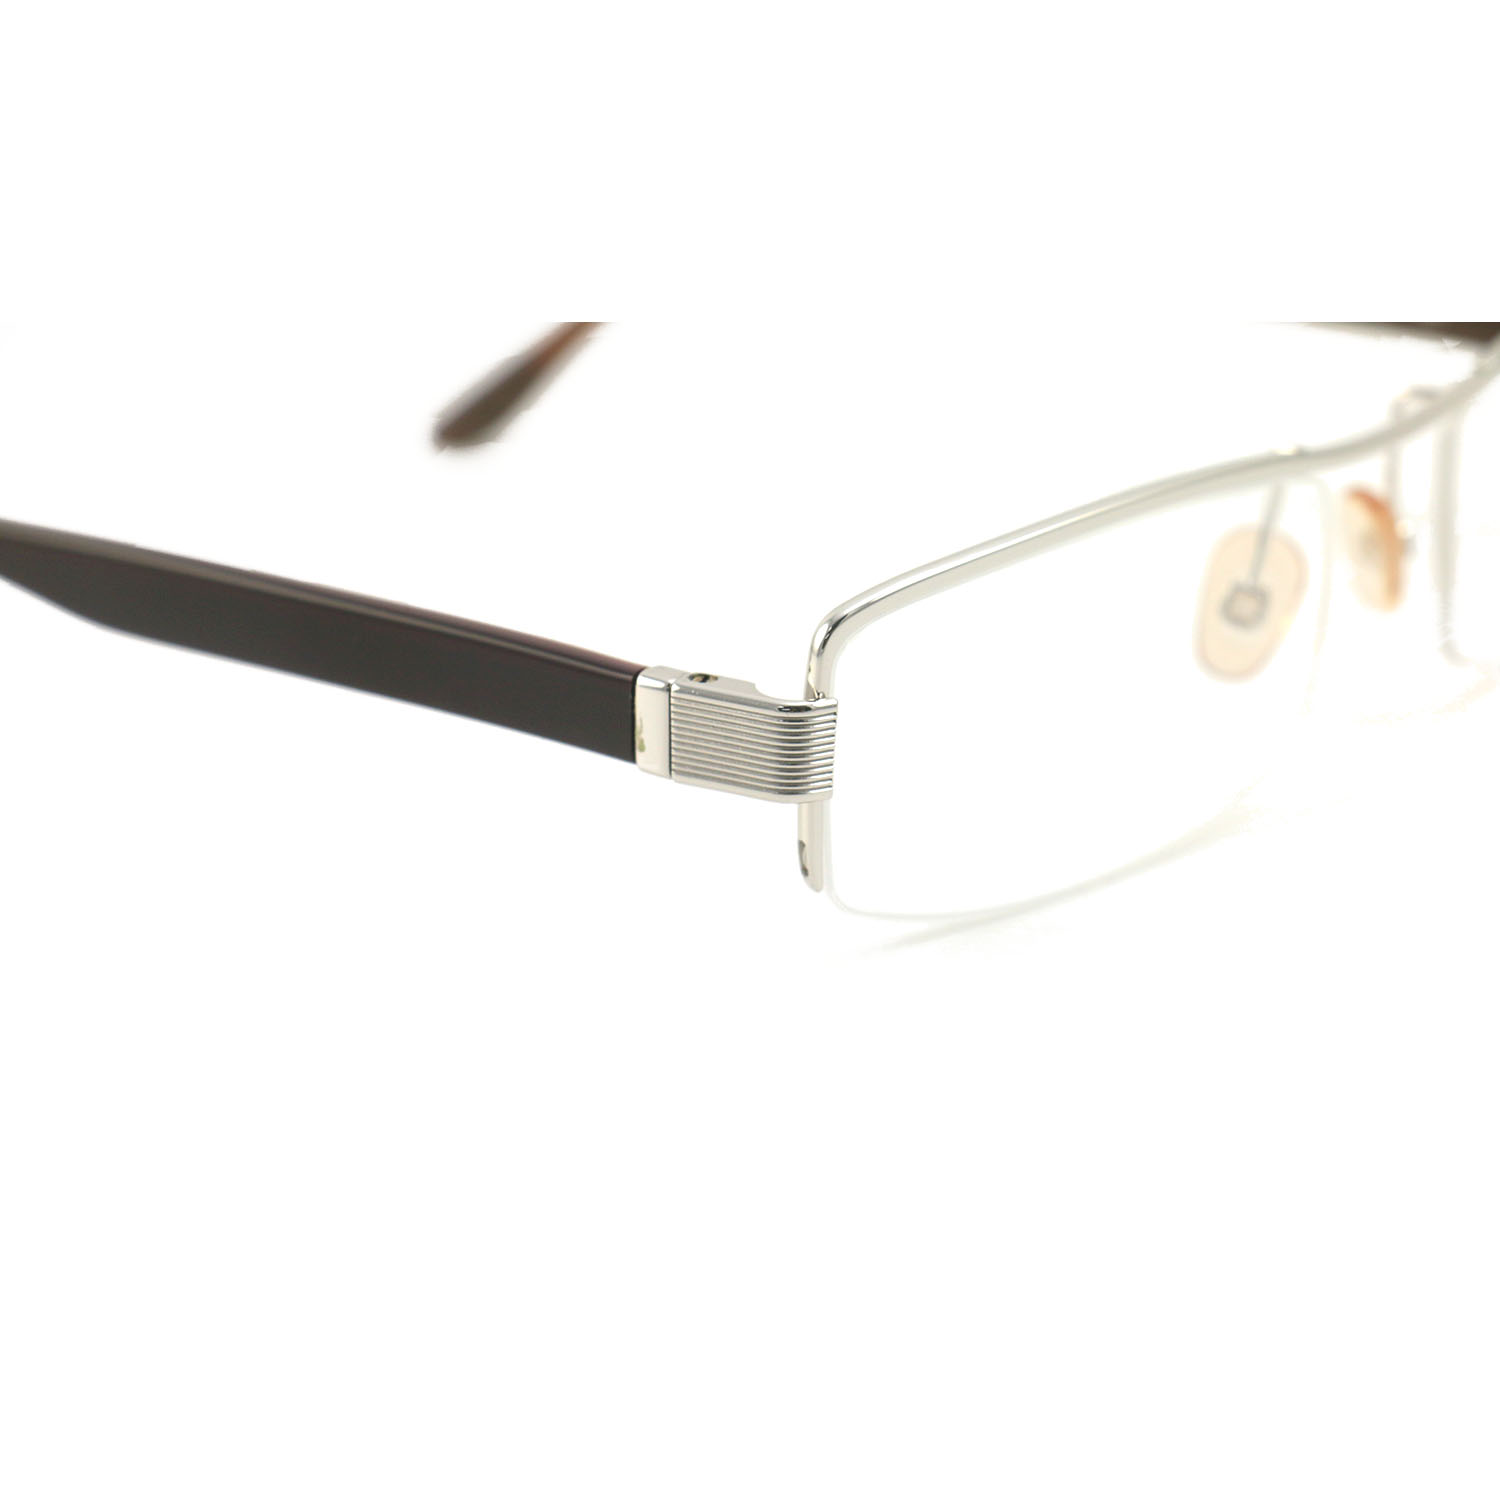 Tom Ford Unisex Eyeglasses TF5093 107 Silver 53 18 135 Rectangle | eBay